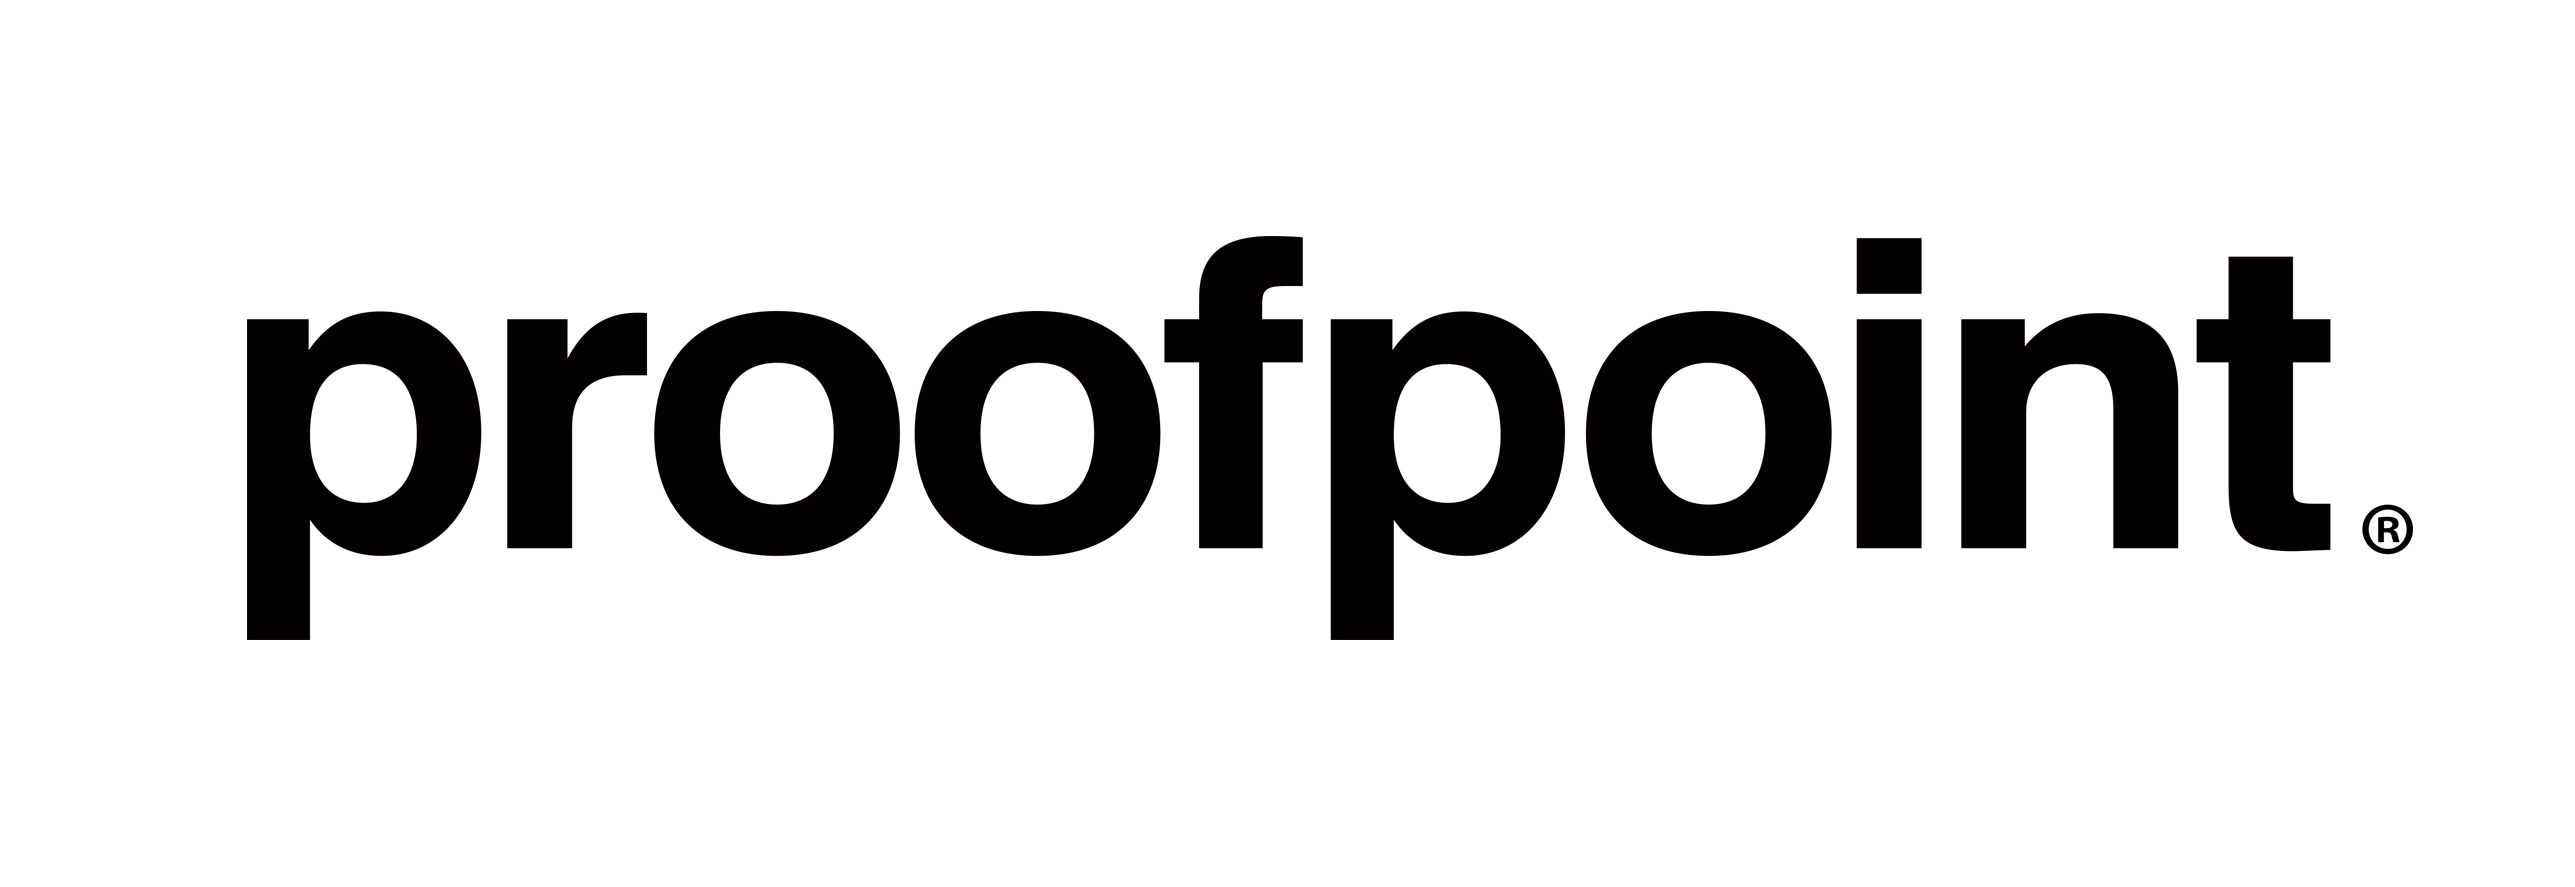 Proofpoint-logo-reg-K.jpg